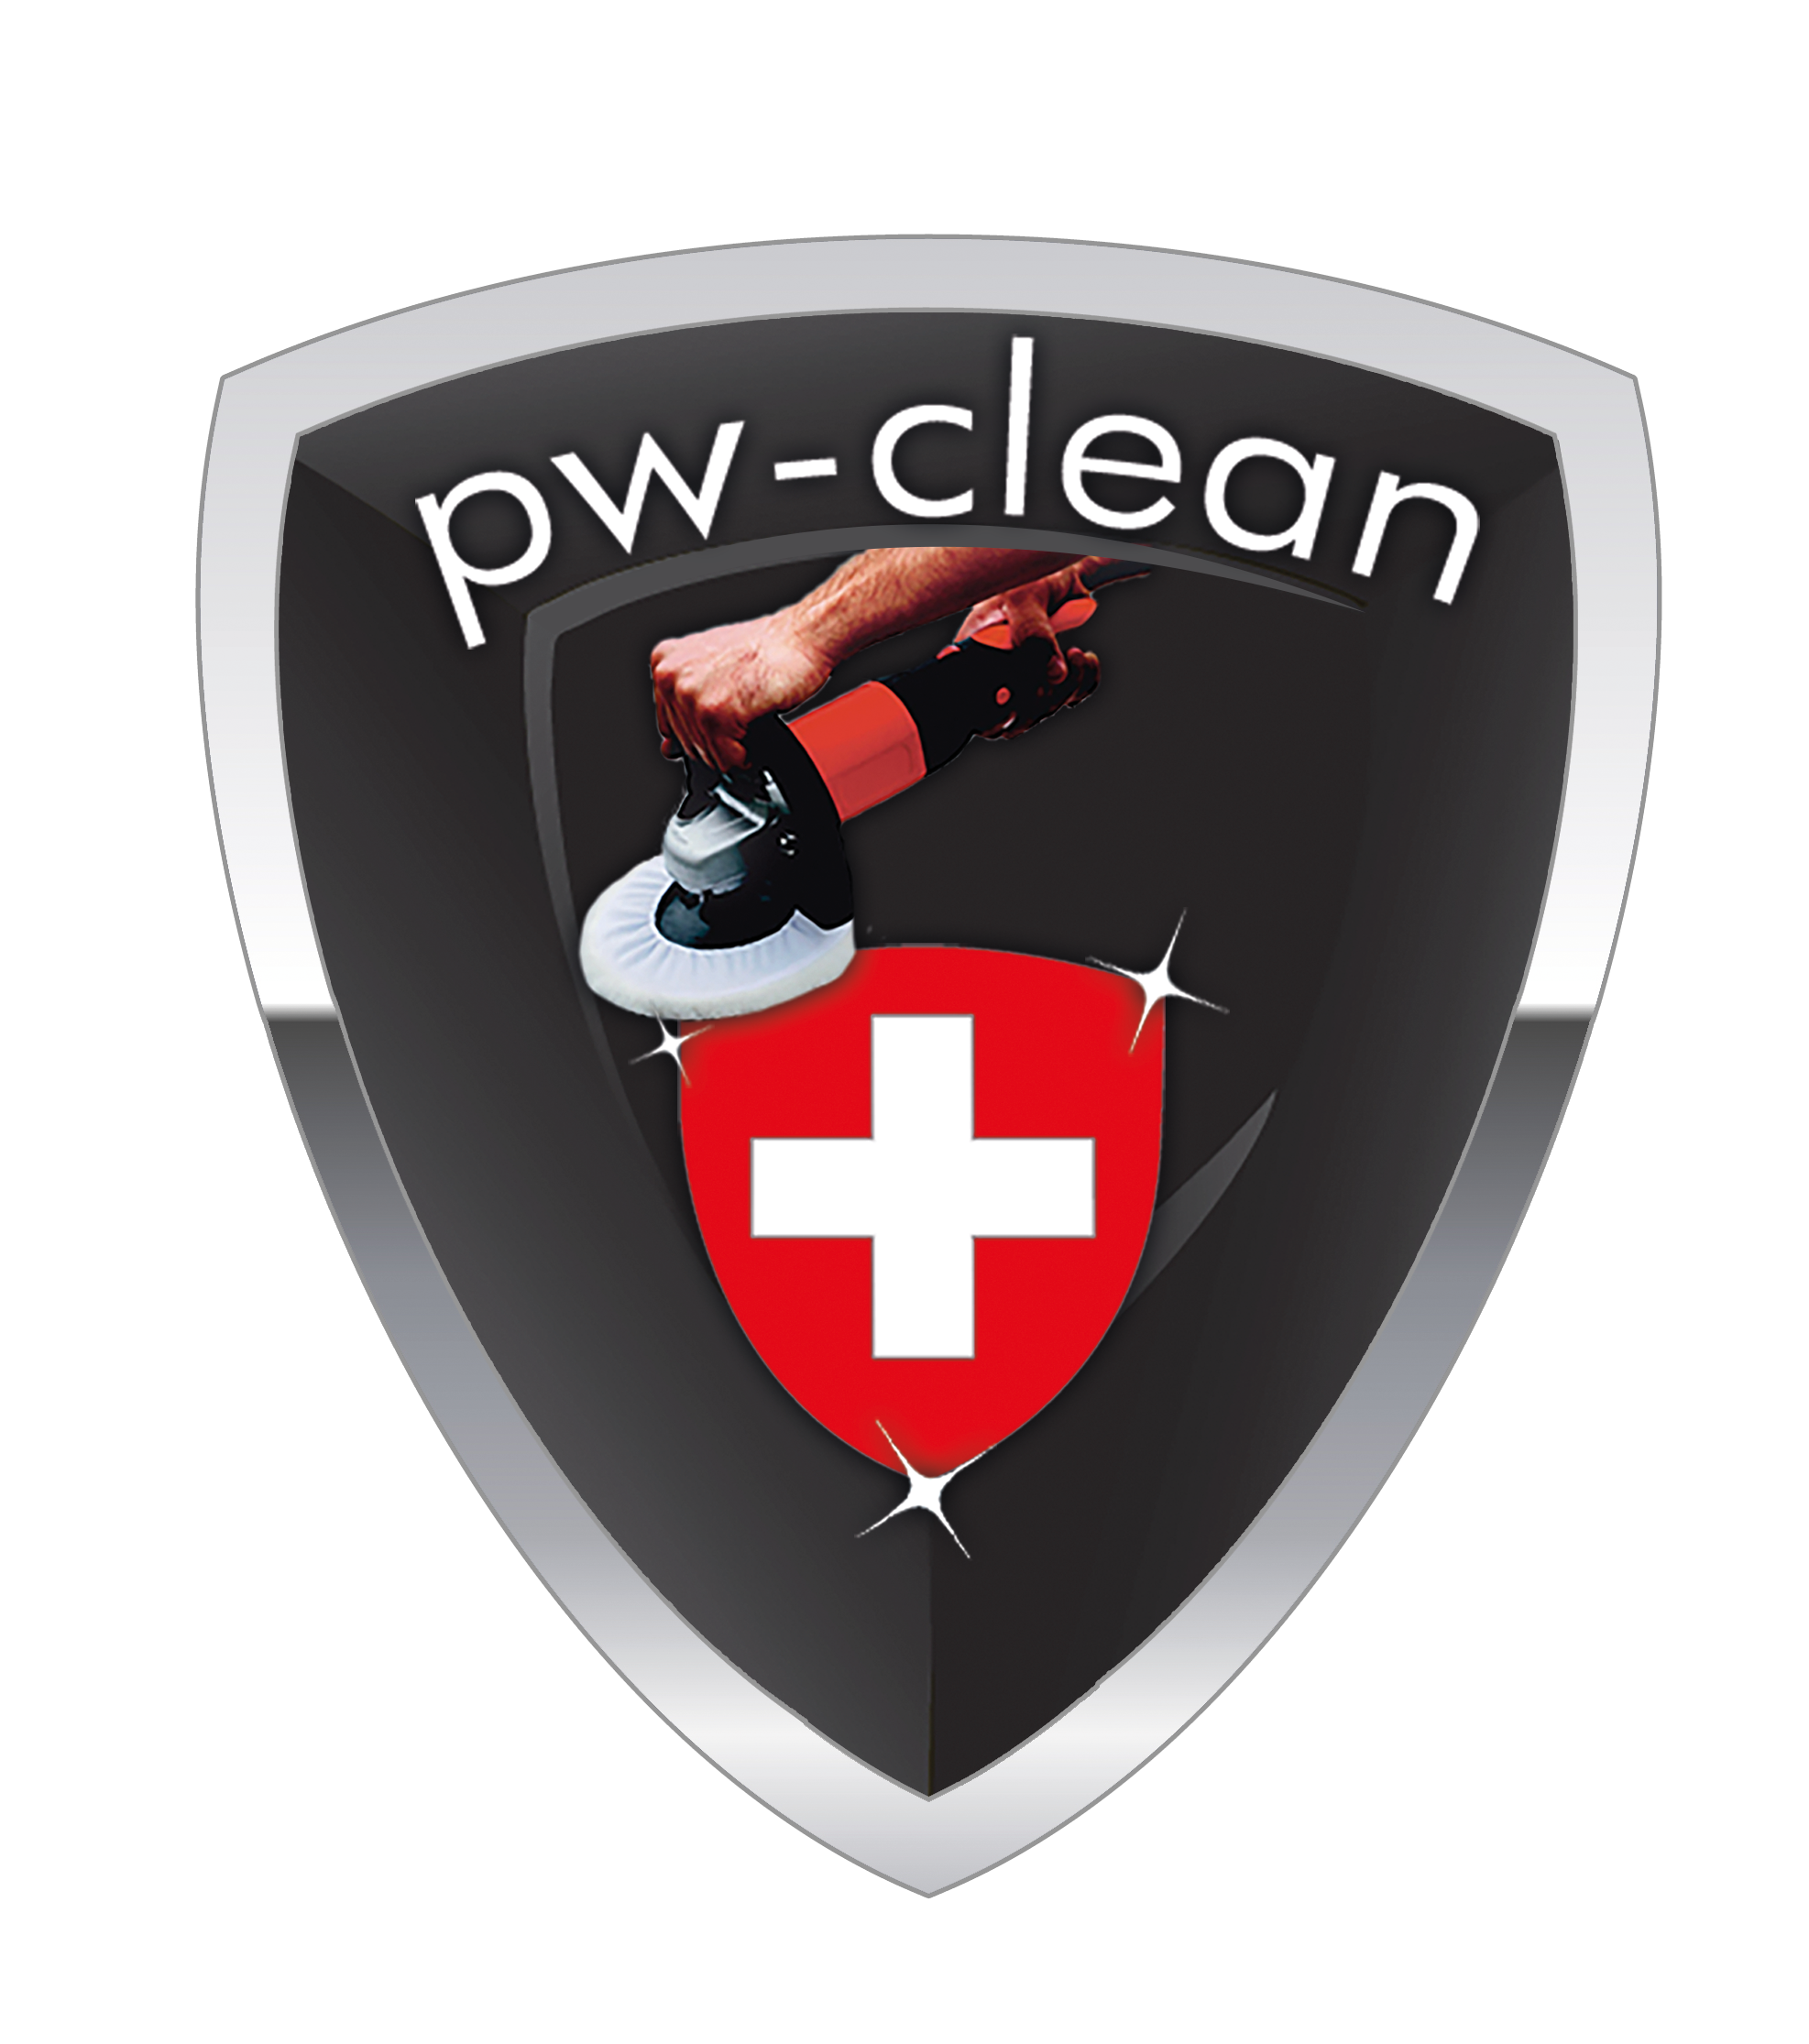 (c) Pw-clean.ch